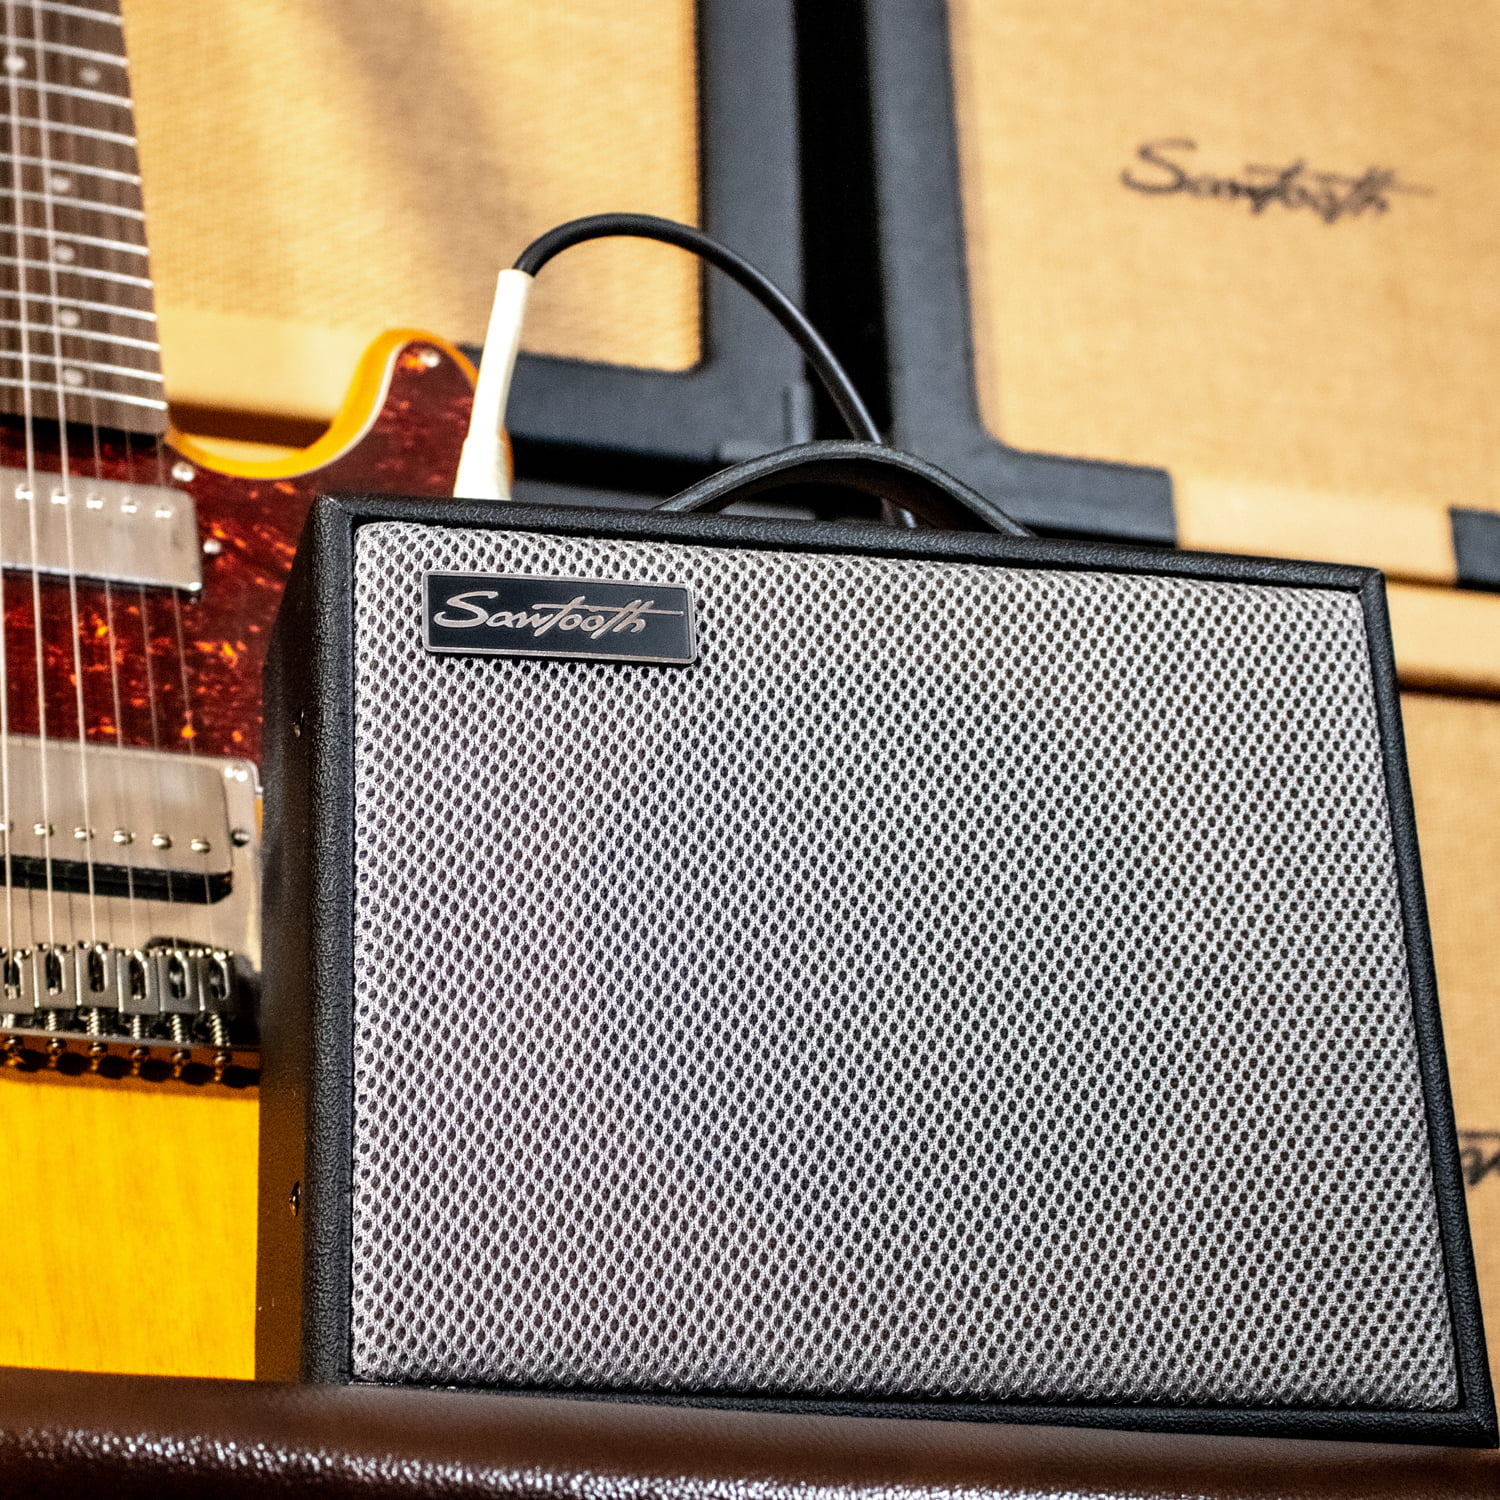 Sawtooth 10-Watt Electric Guitar Amplifier with ChromaCast Pro 